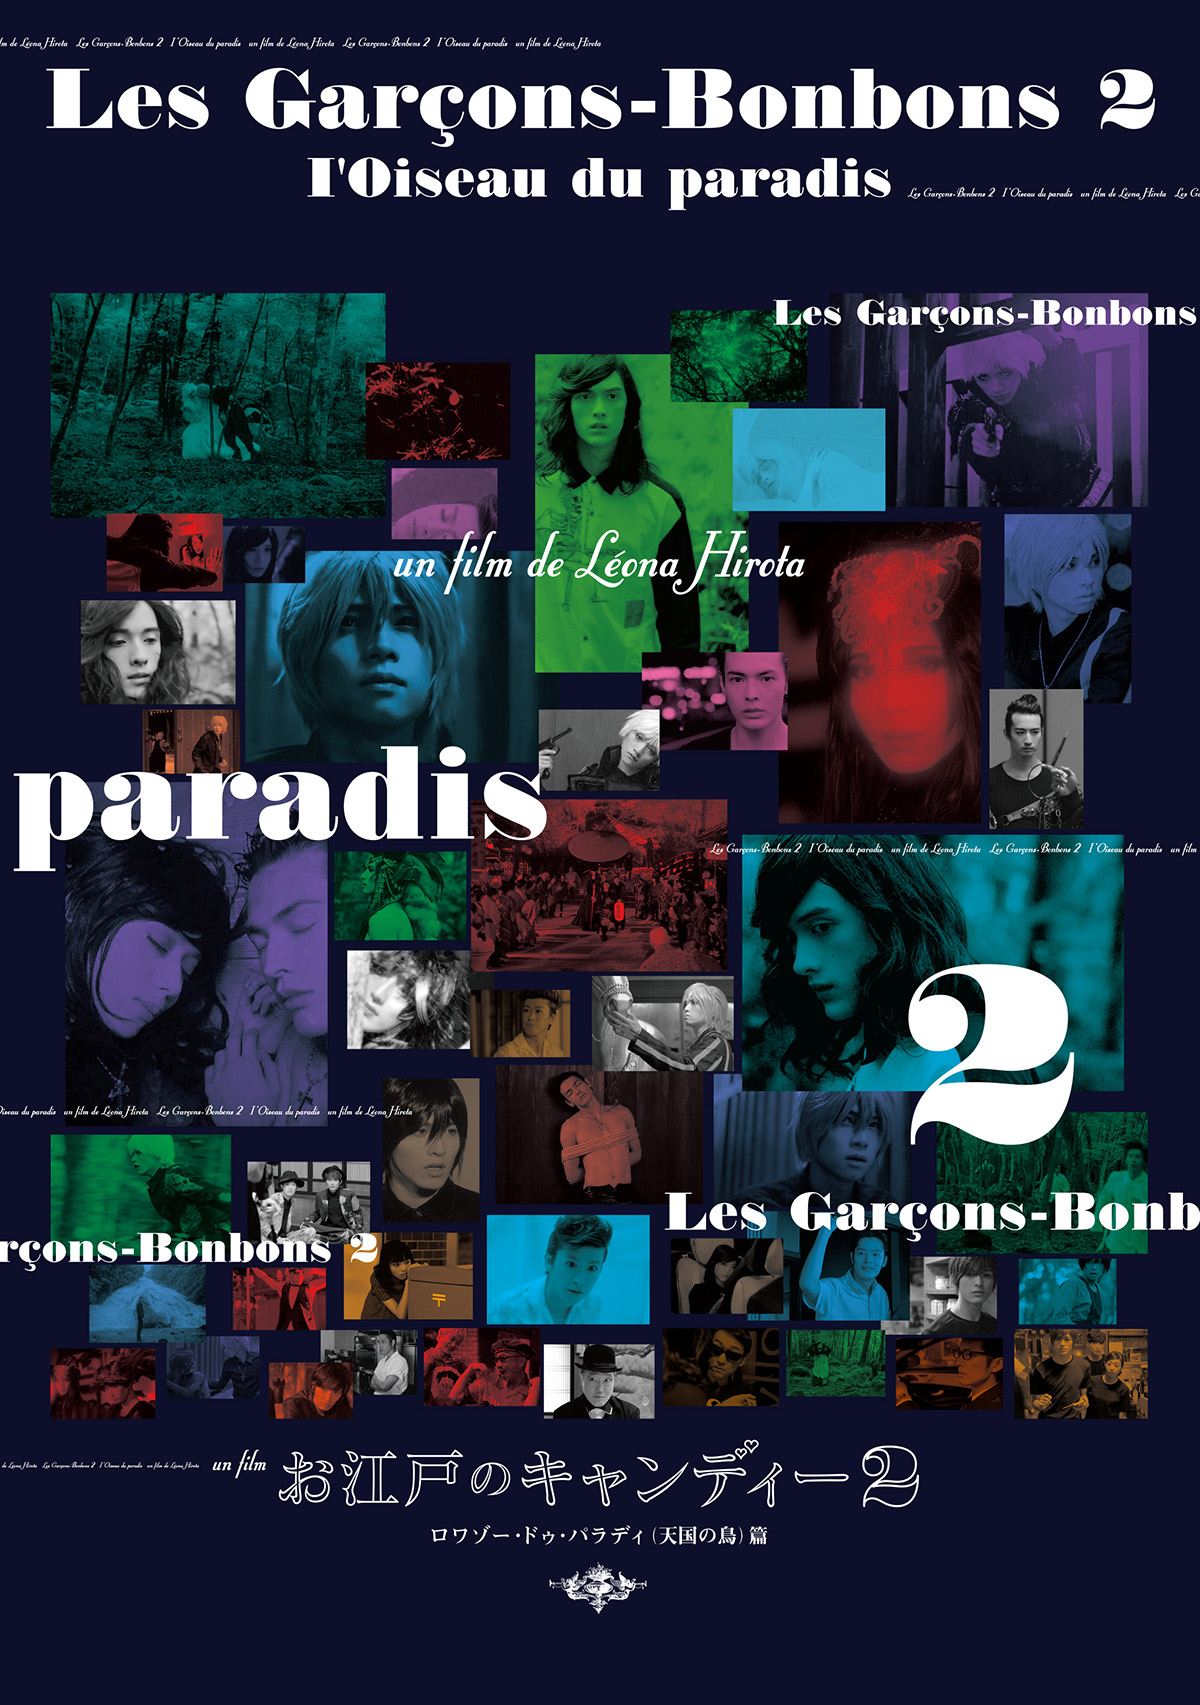 Léona Hirota “Les Garcons-Bonbons 2 -I’Oiseau du paradis-”